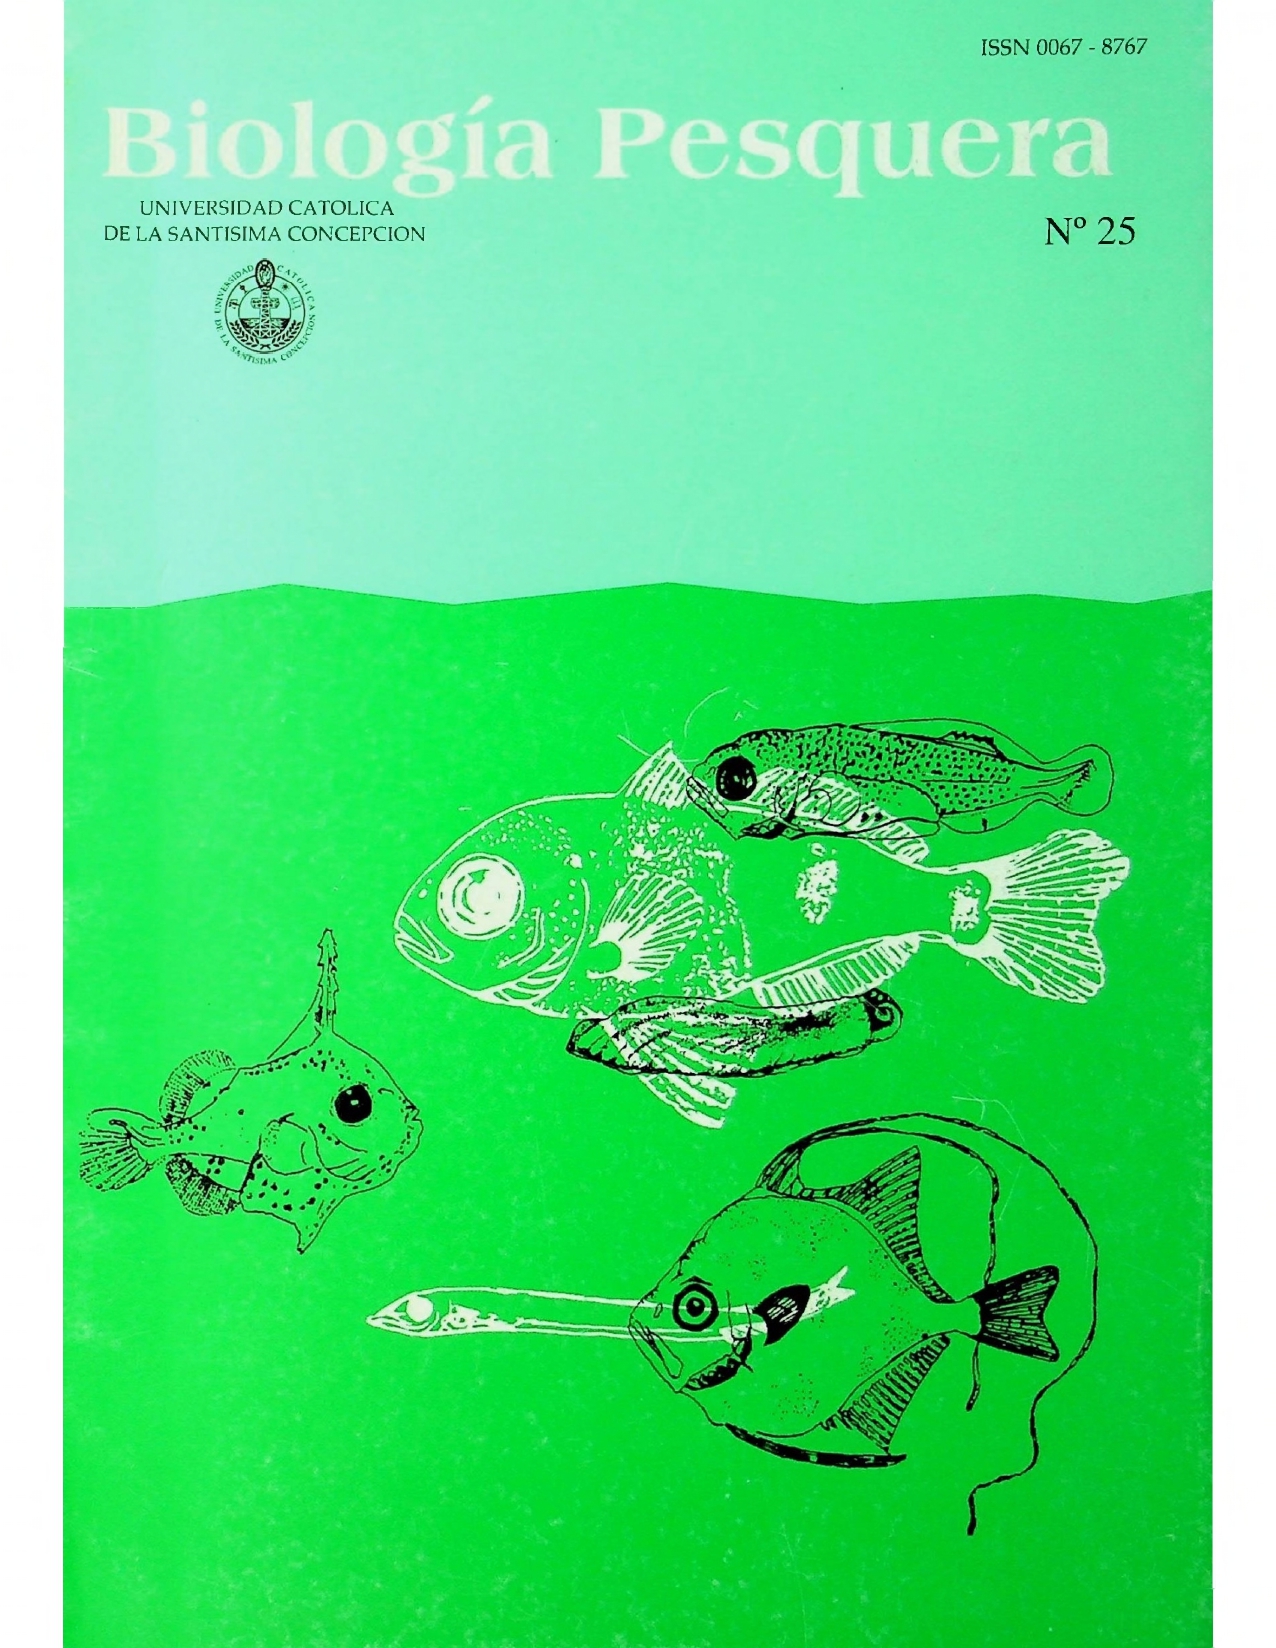 					Ver Núm. 25 (1996): Biología Pesquera
				